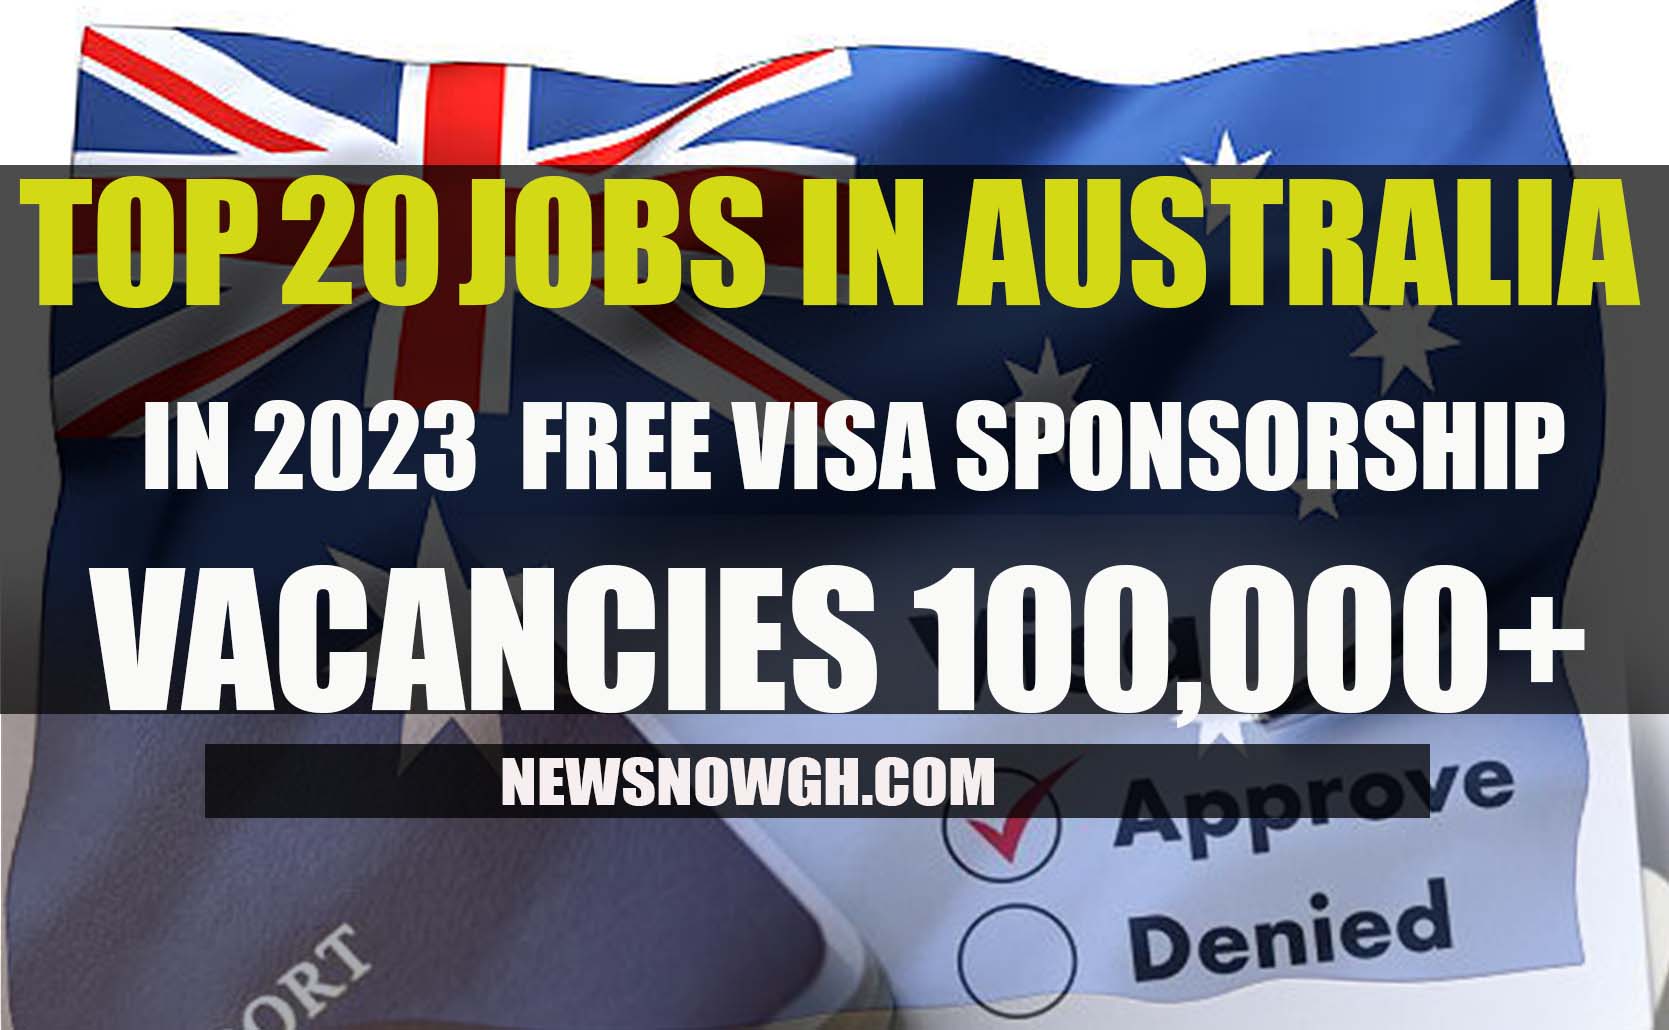 TOP 20 JOBS IN AUSTRALIA WITH VISA SPONSORSHIP